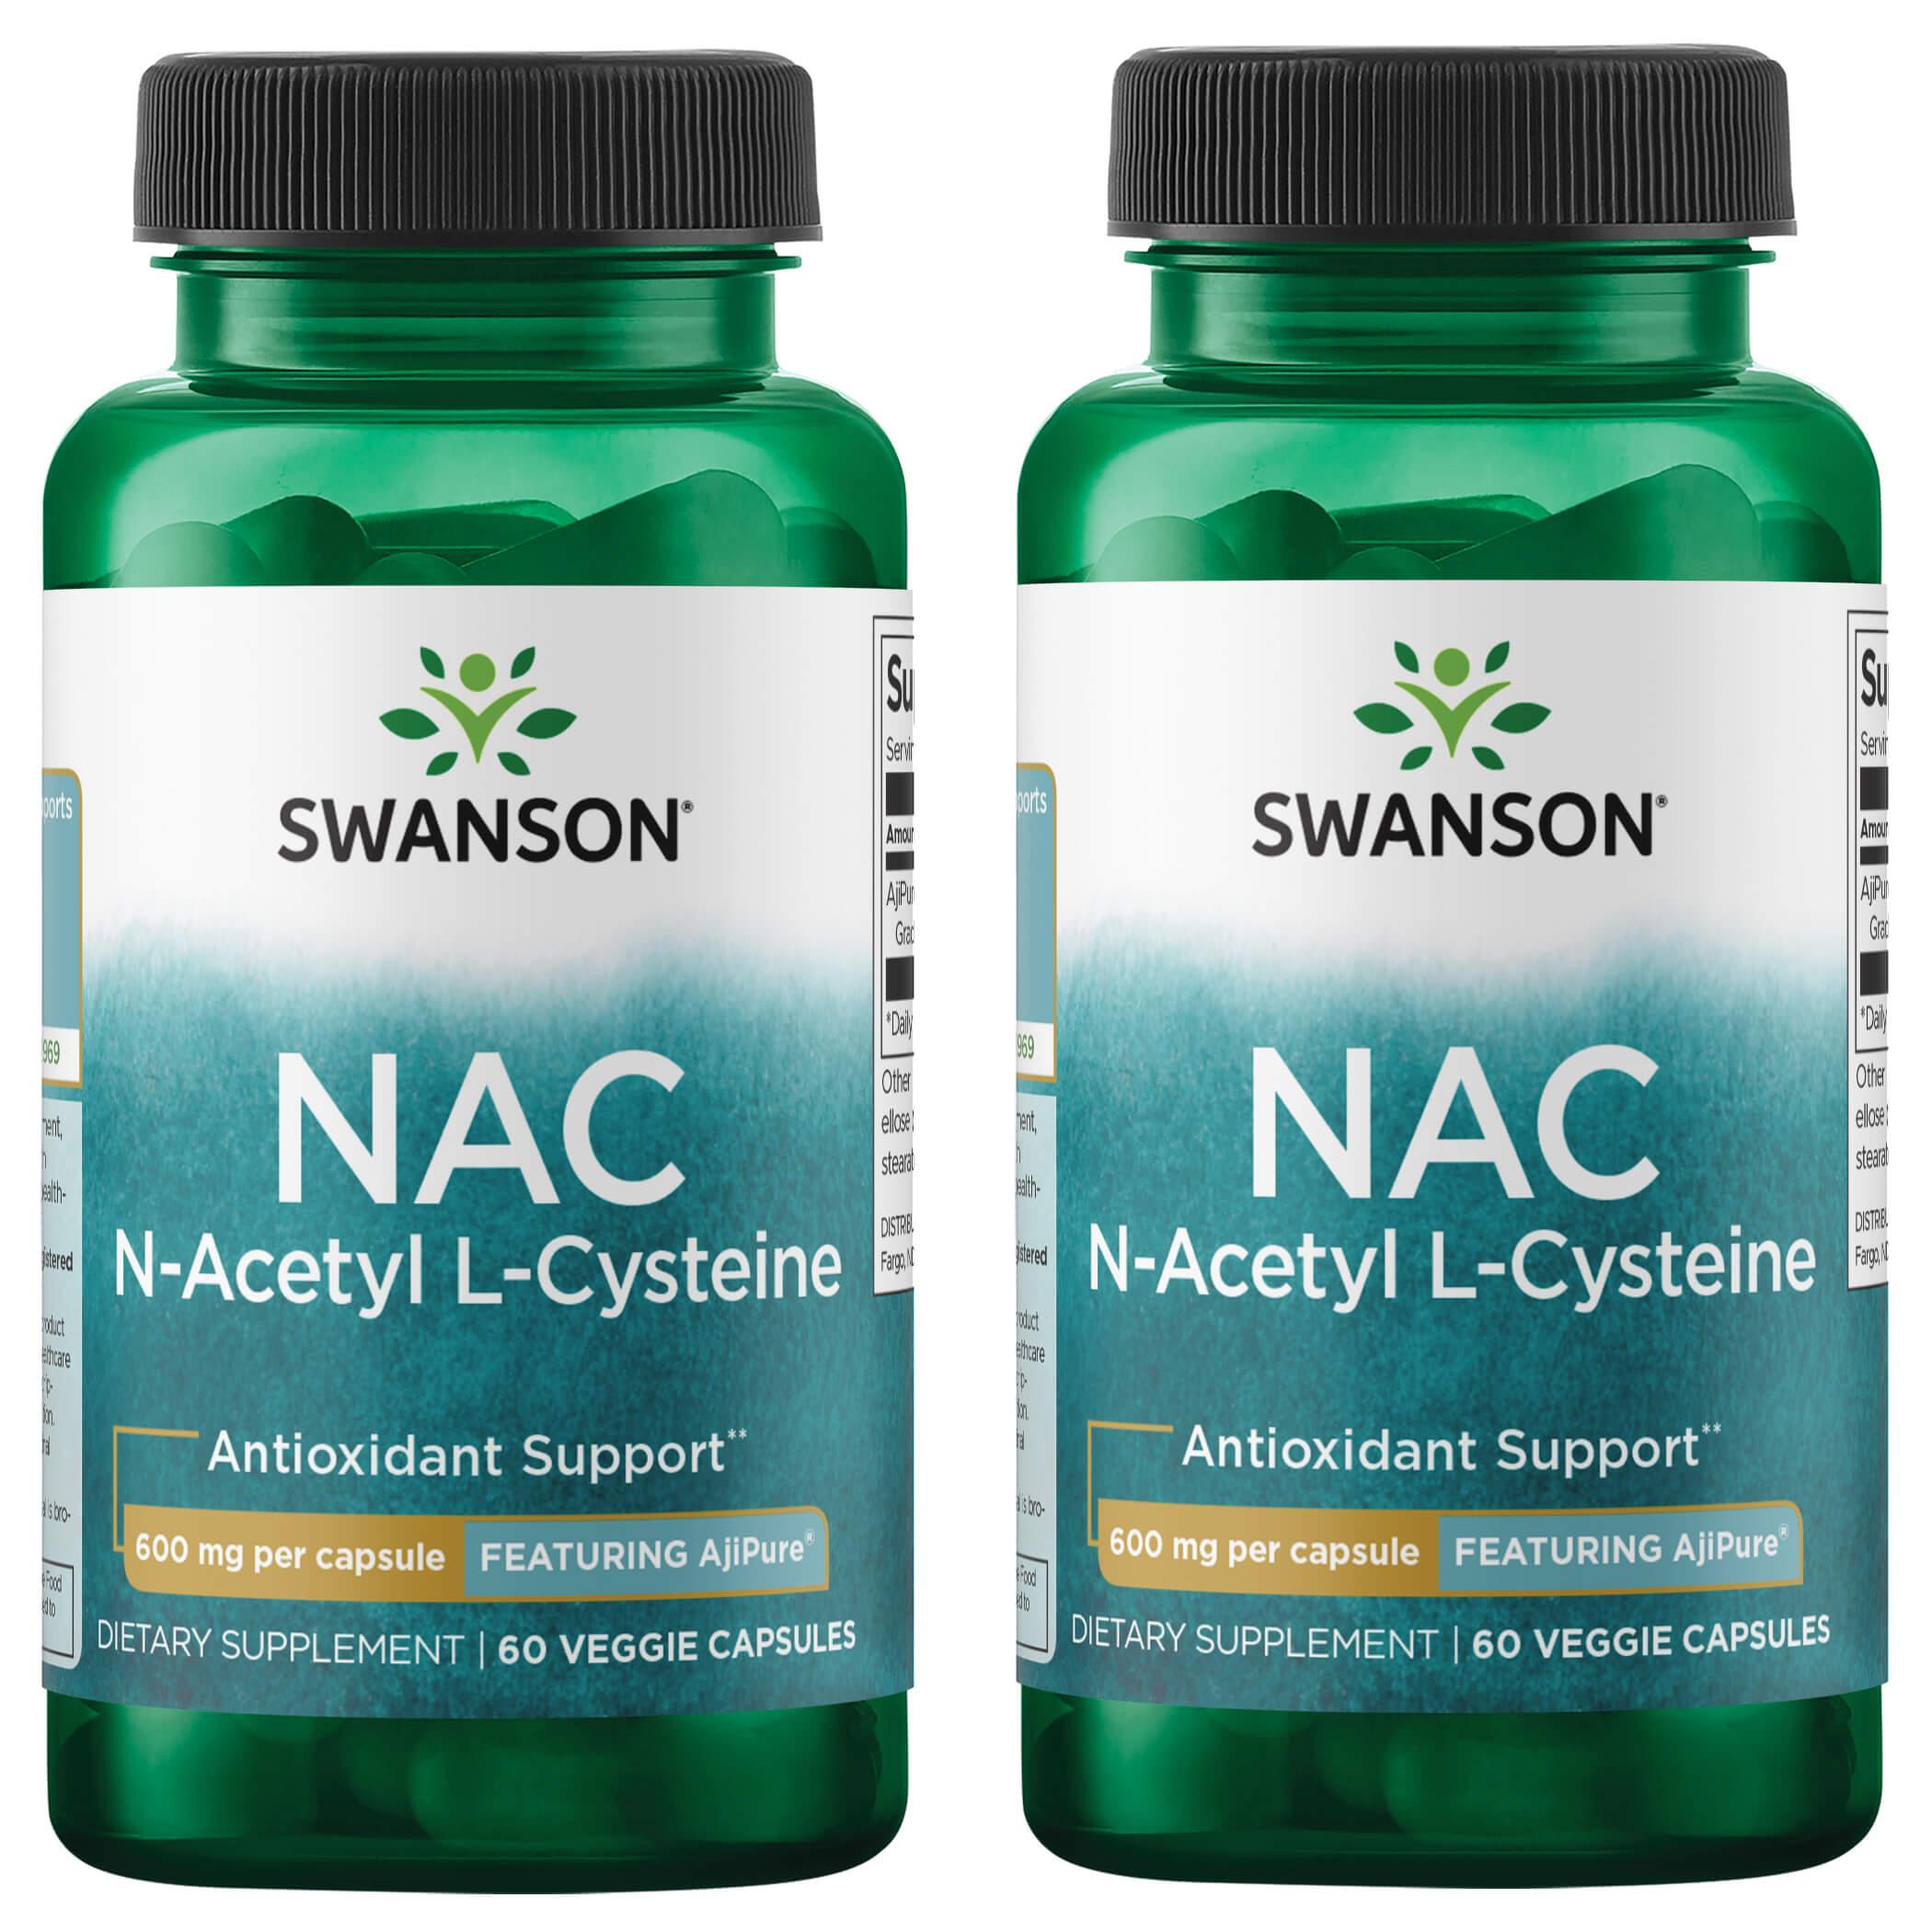 Swanson Ultra Nac N-Acetyl L-Cysteine - Featuring Ajipure 2 Pack Supplement Vitamin 600 mg 60 Veg Caps